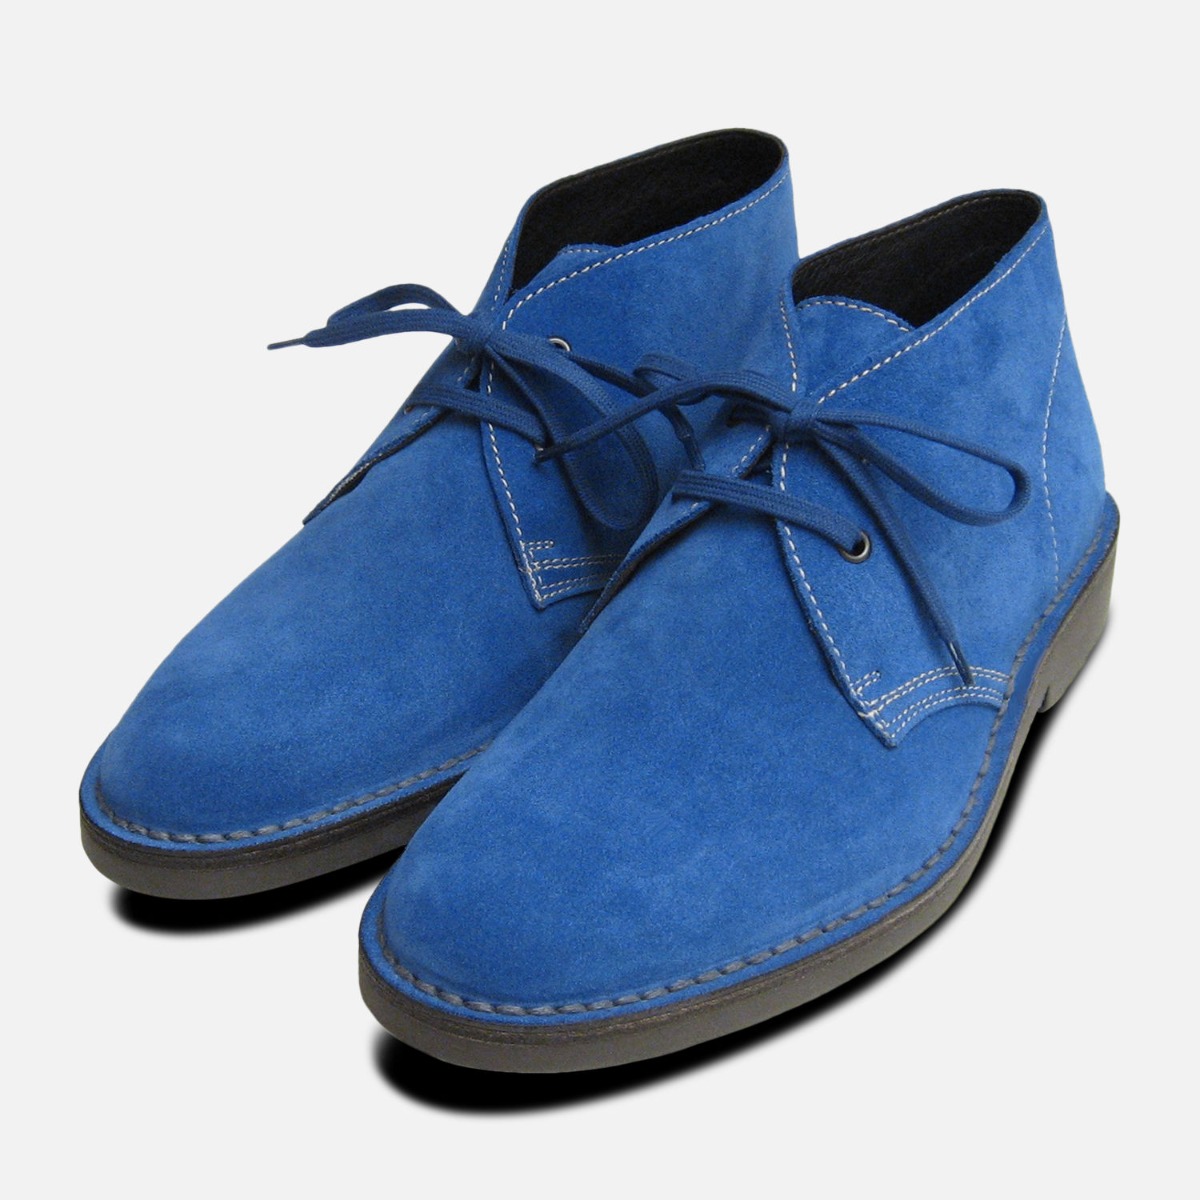 Blue Suede Prince Harry Desert Boots Mens | eBay